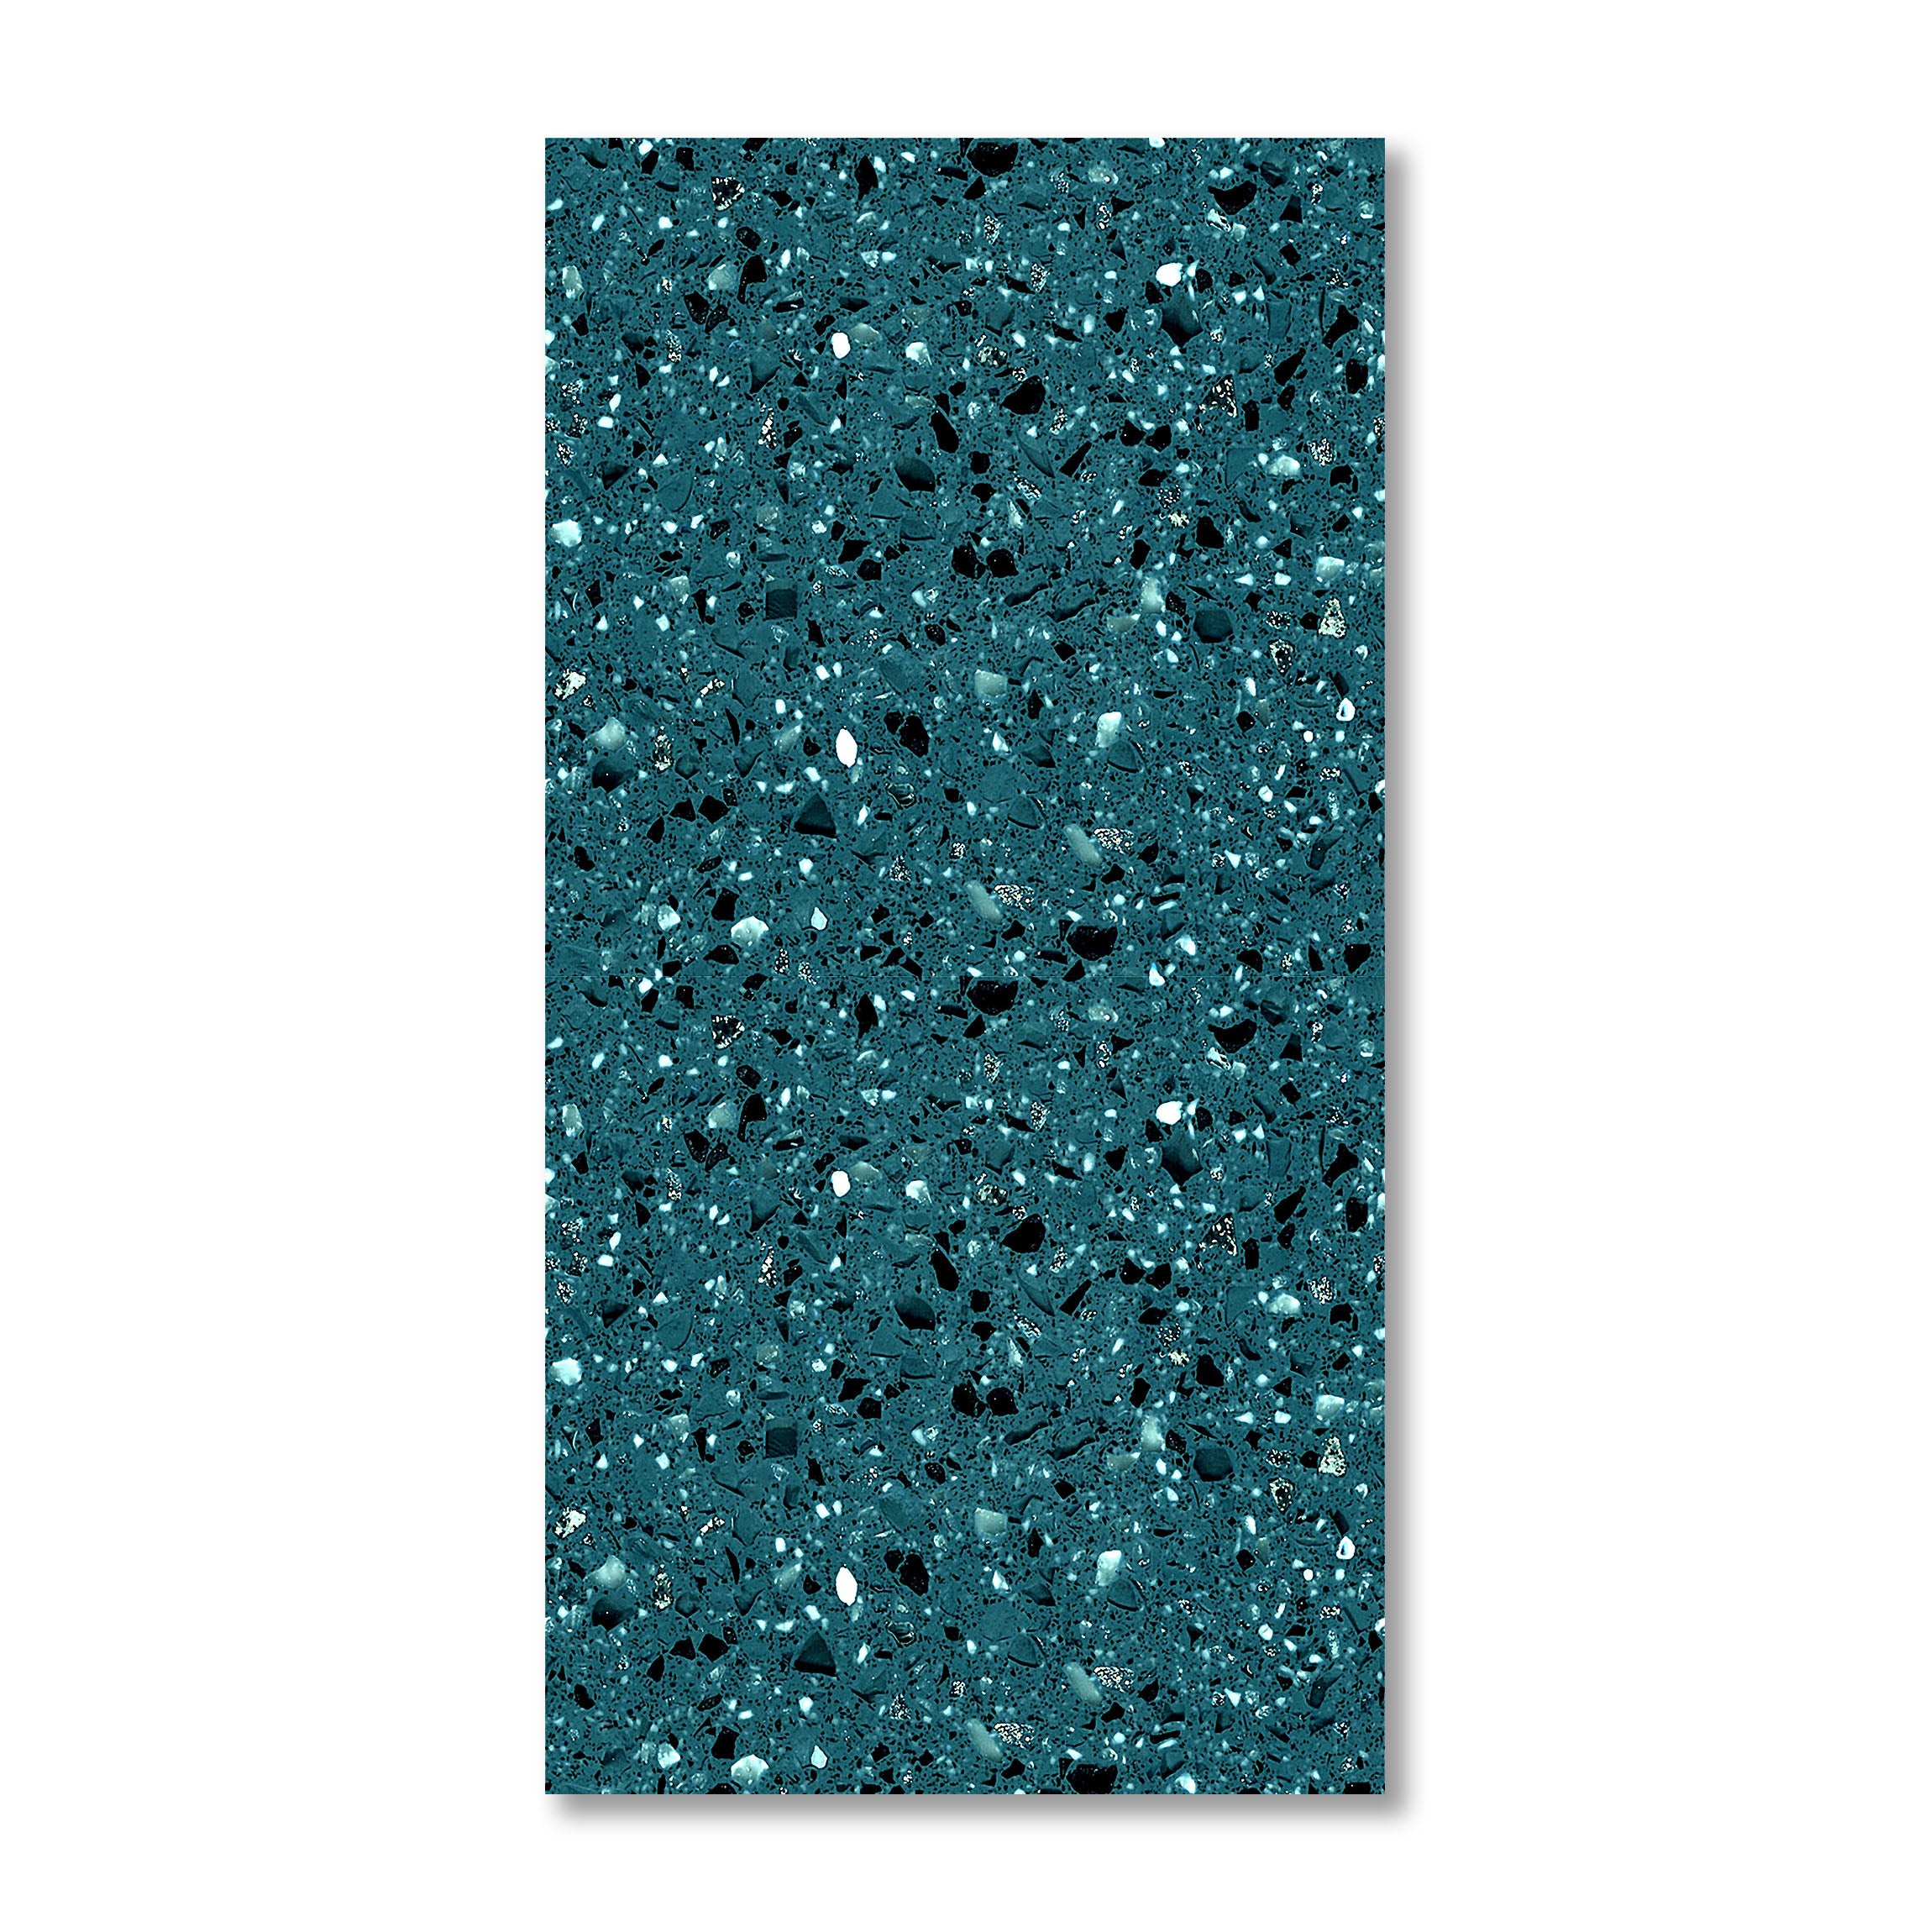 Marble Granite Texture